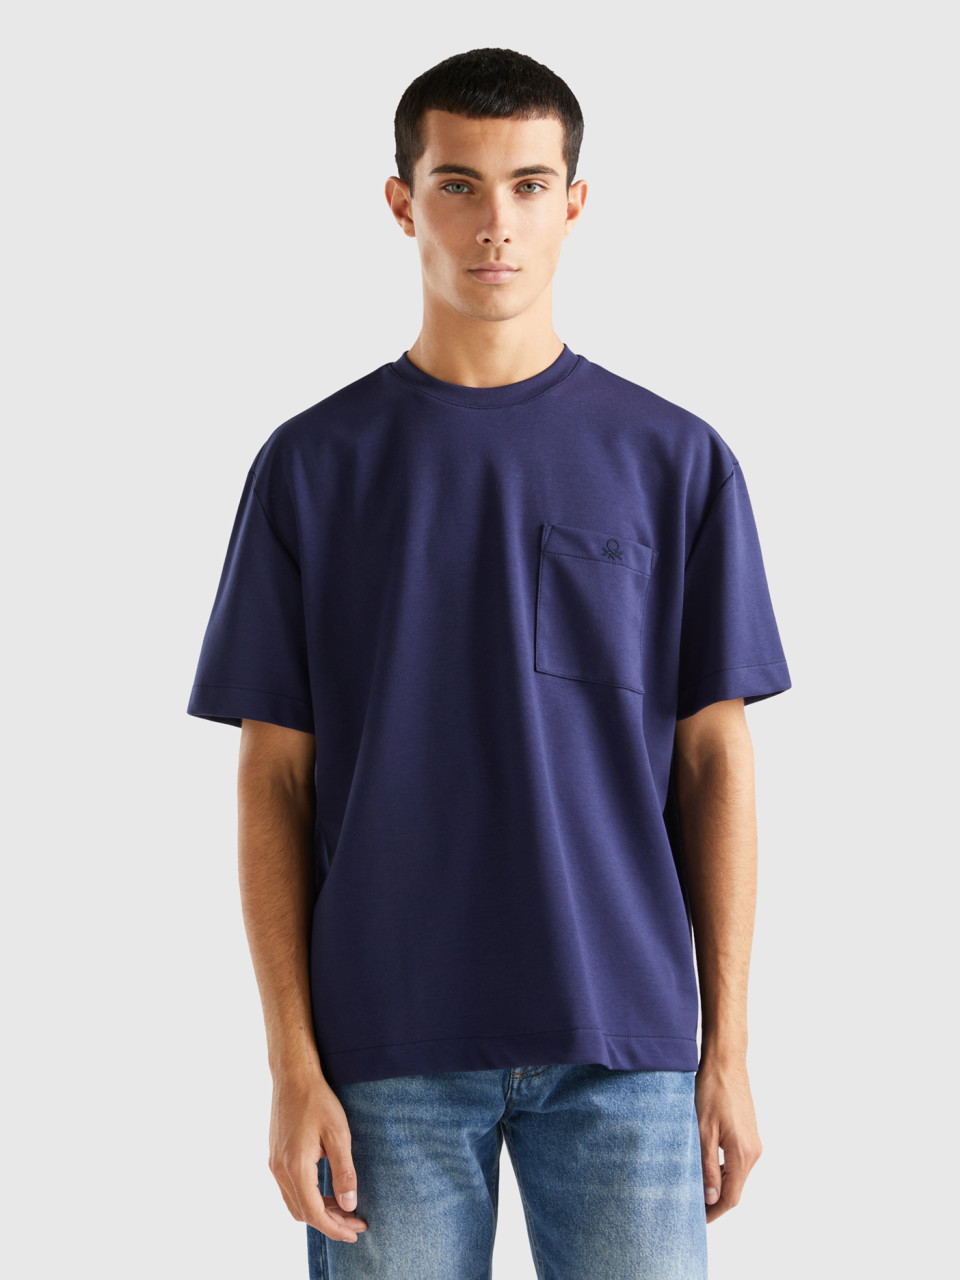 Benetton, Oversized T-shirt With Pocket, Dark Blue, Men